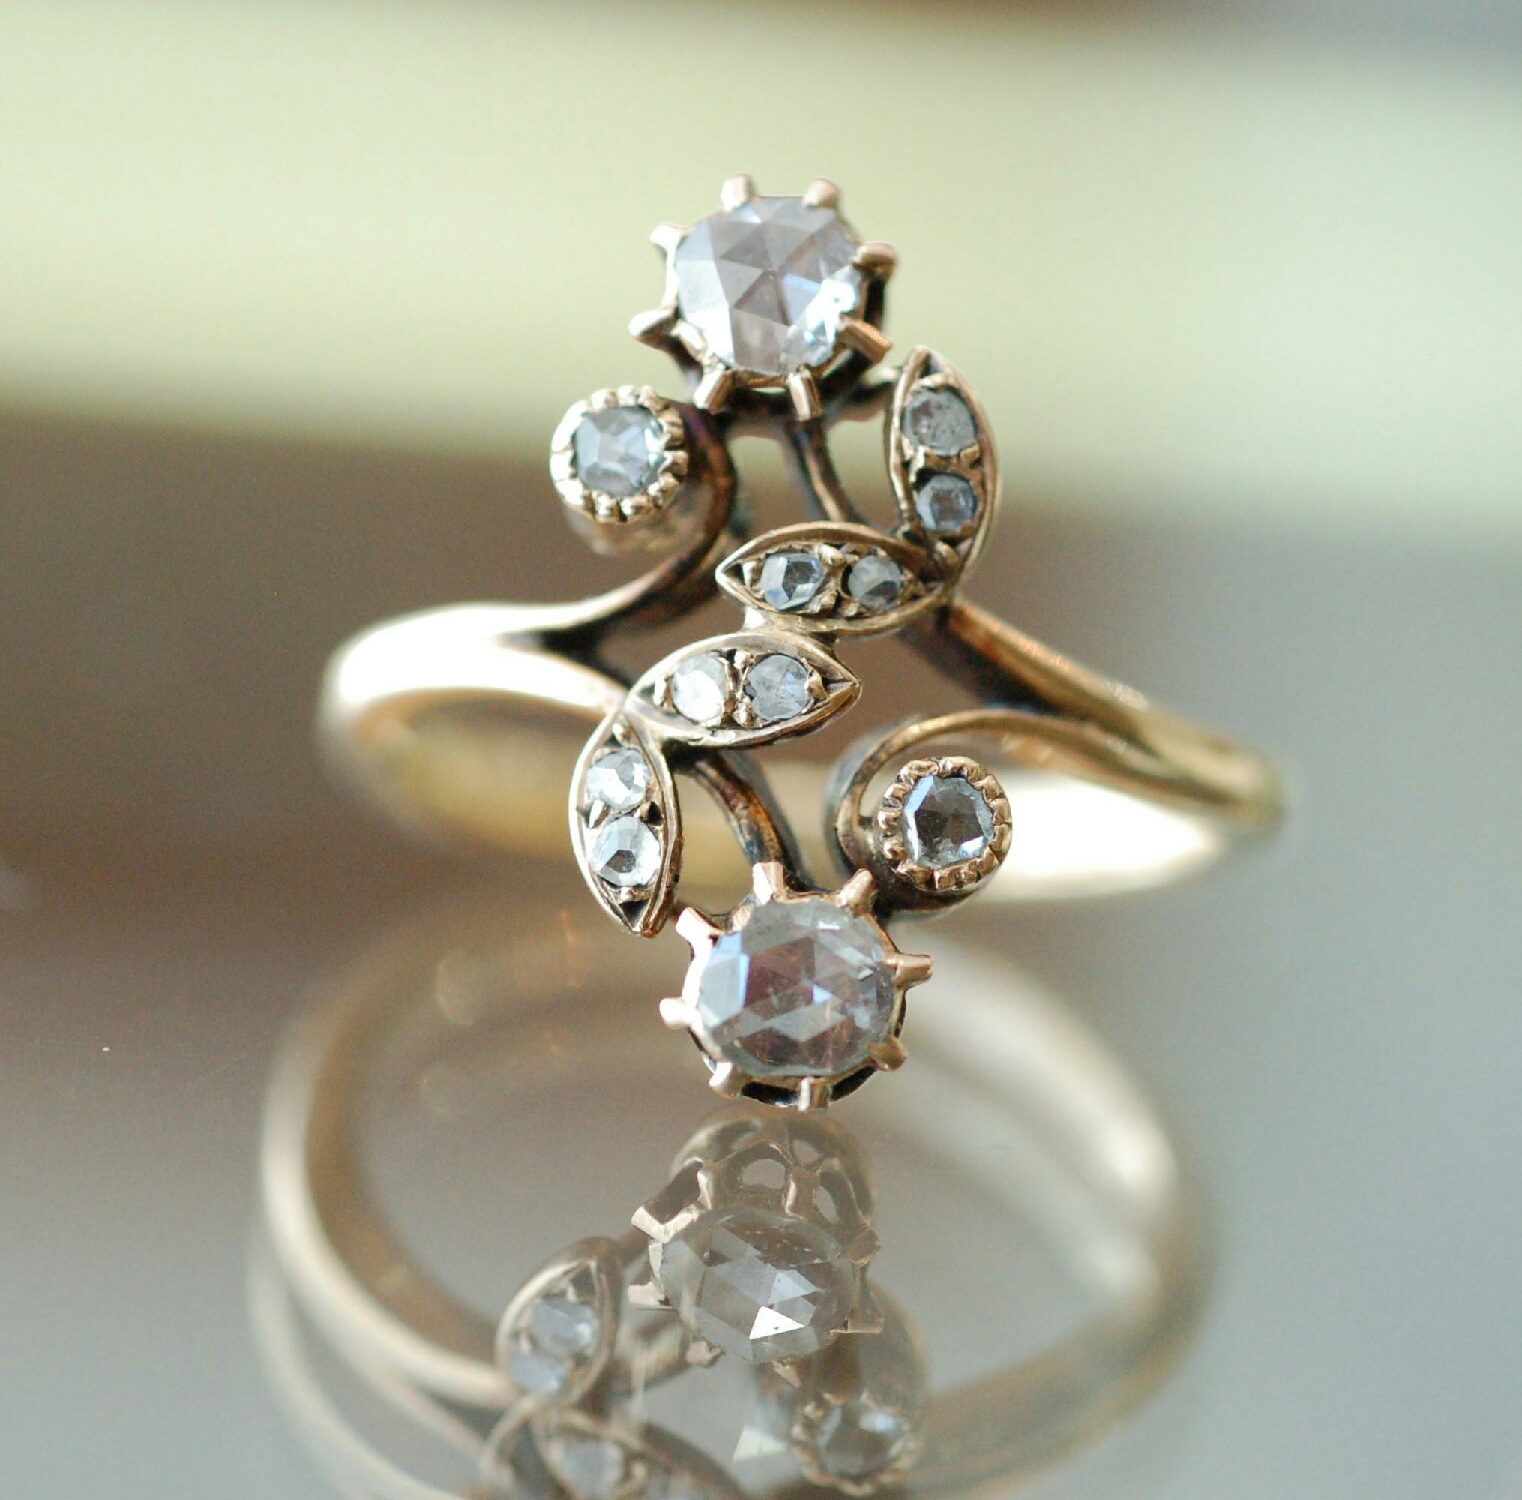 Rose cut diamond engagement ring